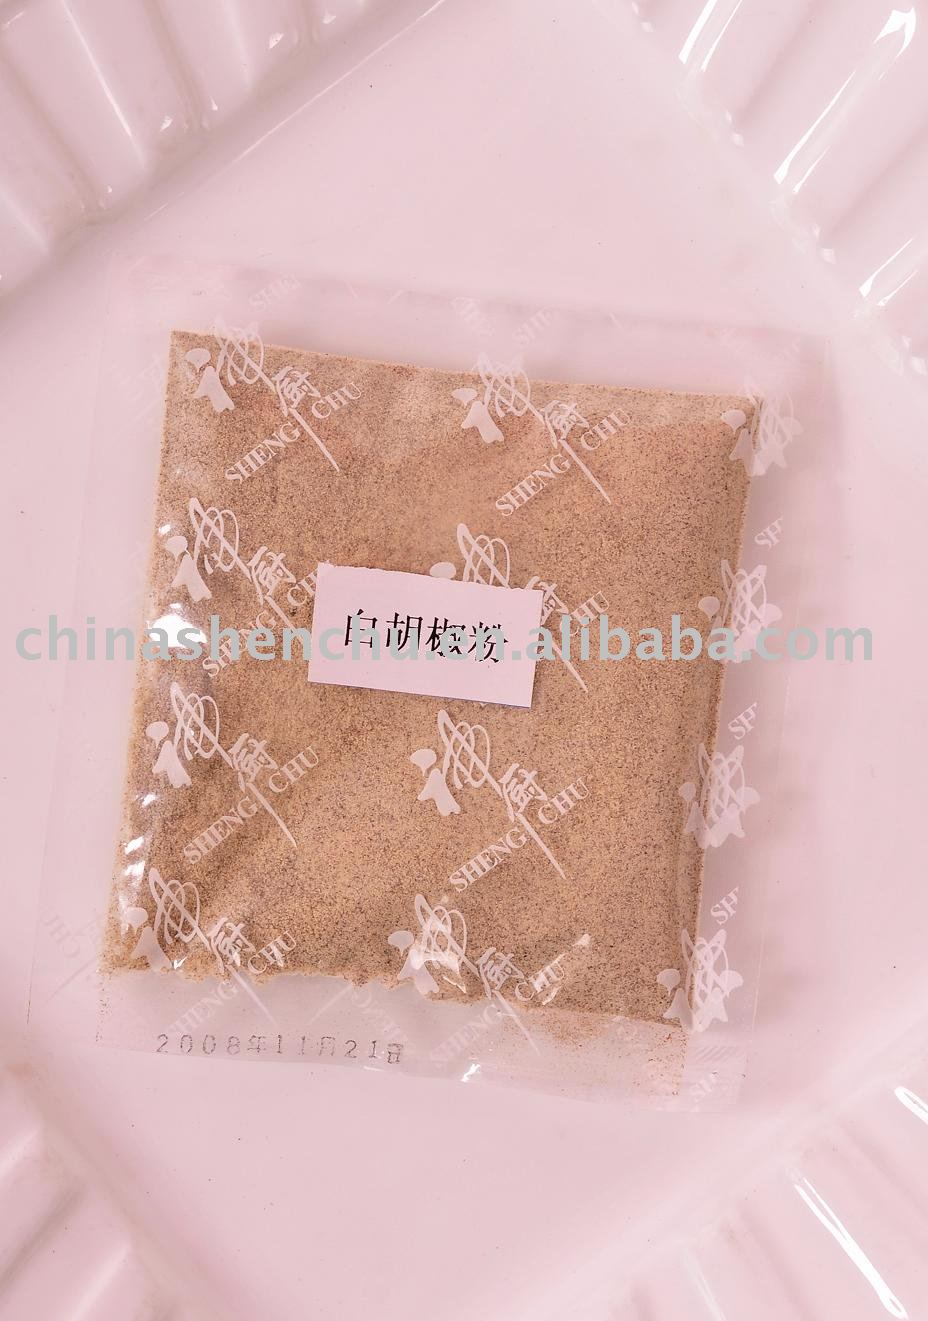 white pepper powder,China SHENCHU price supplier - 21food